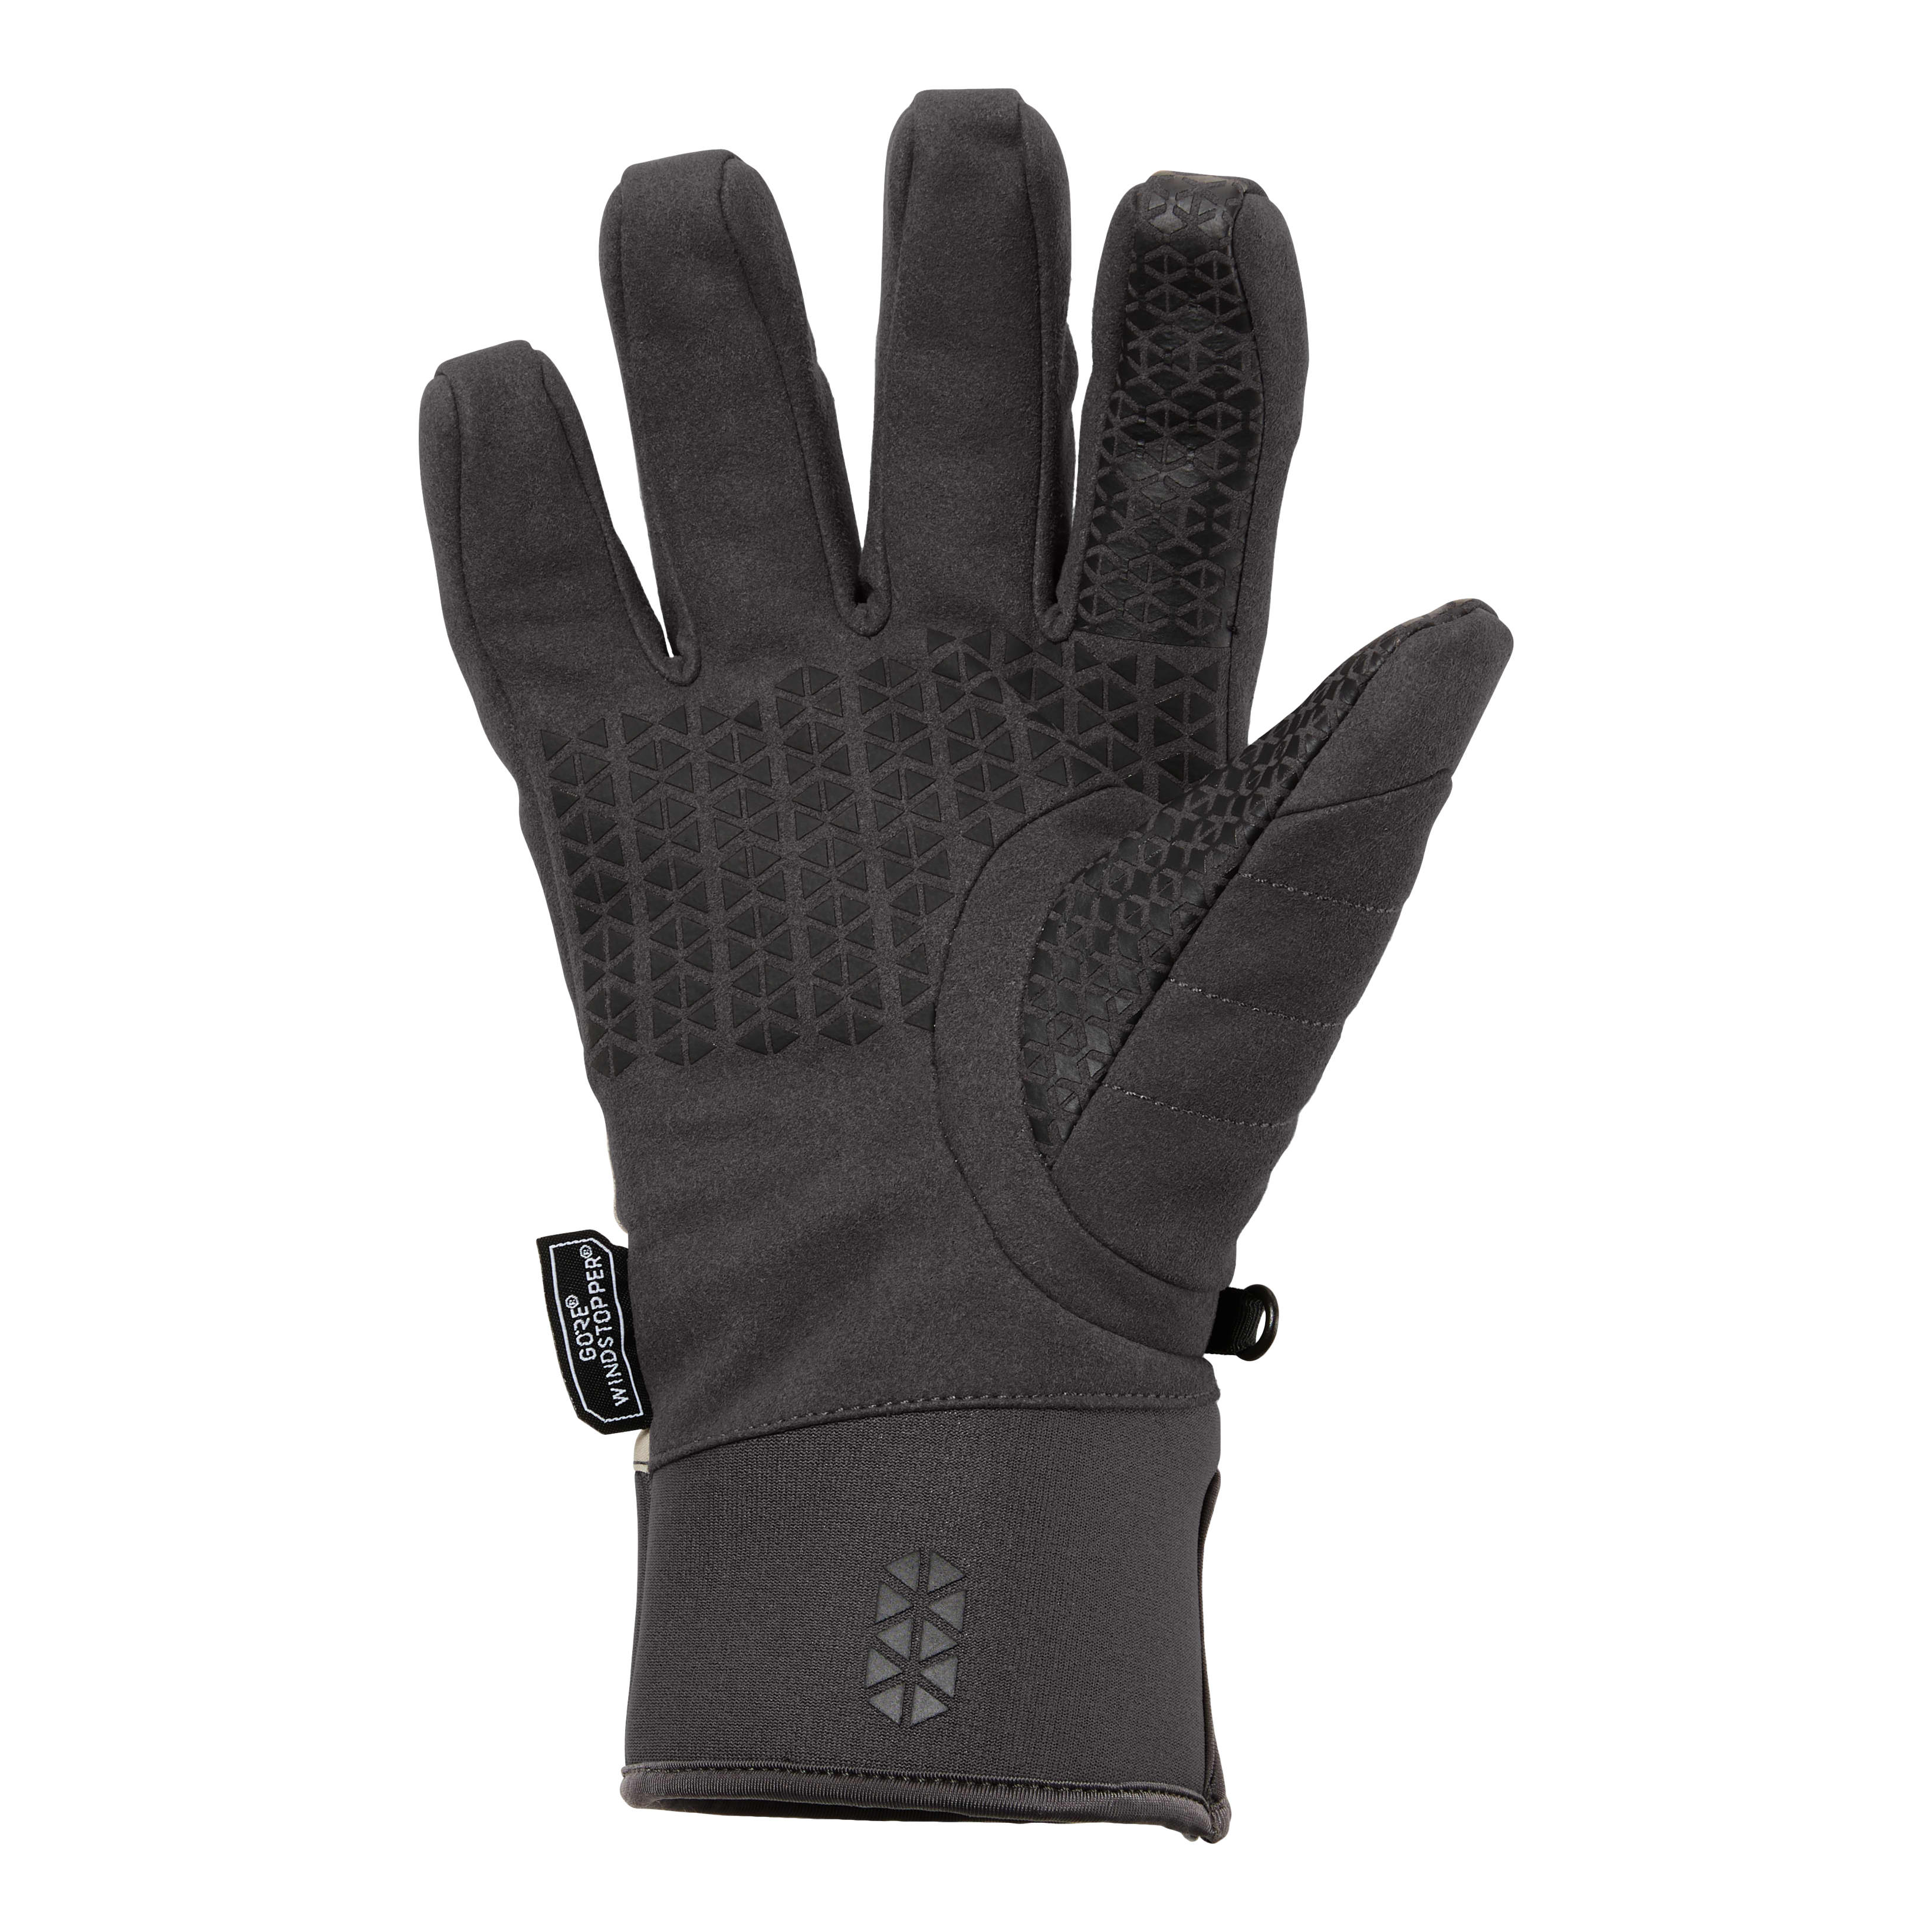 Under Armour® Men's Mid Season Hunting Gloves